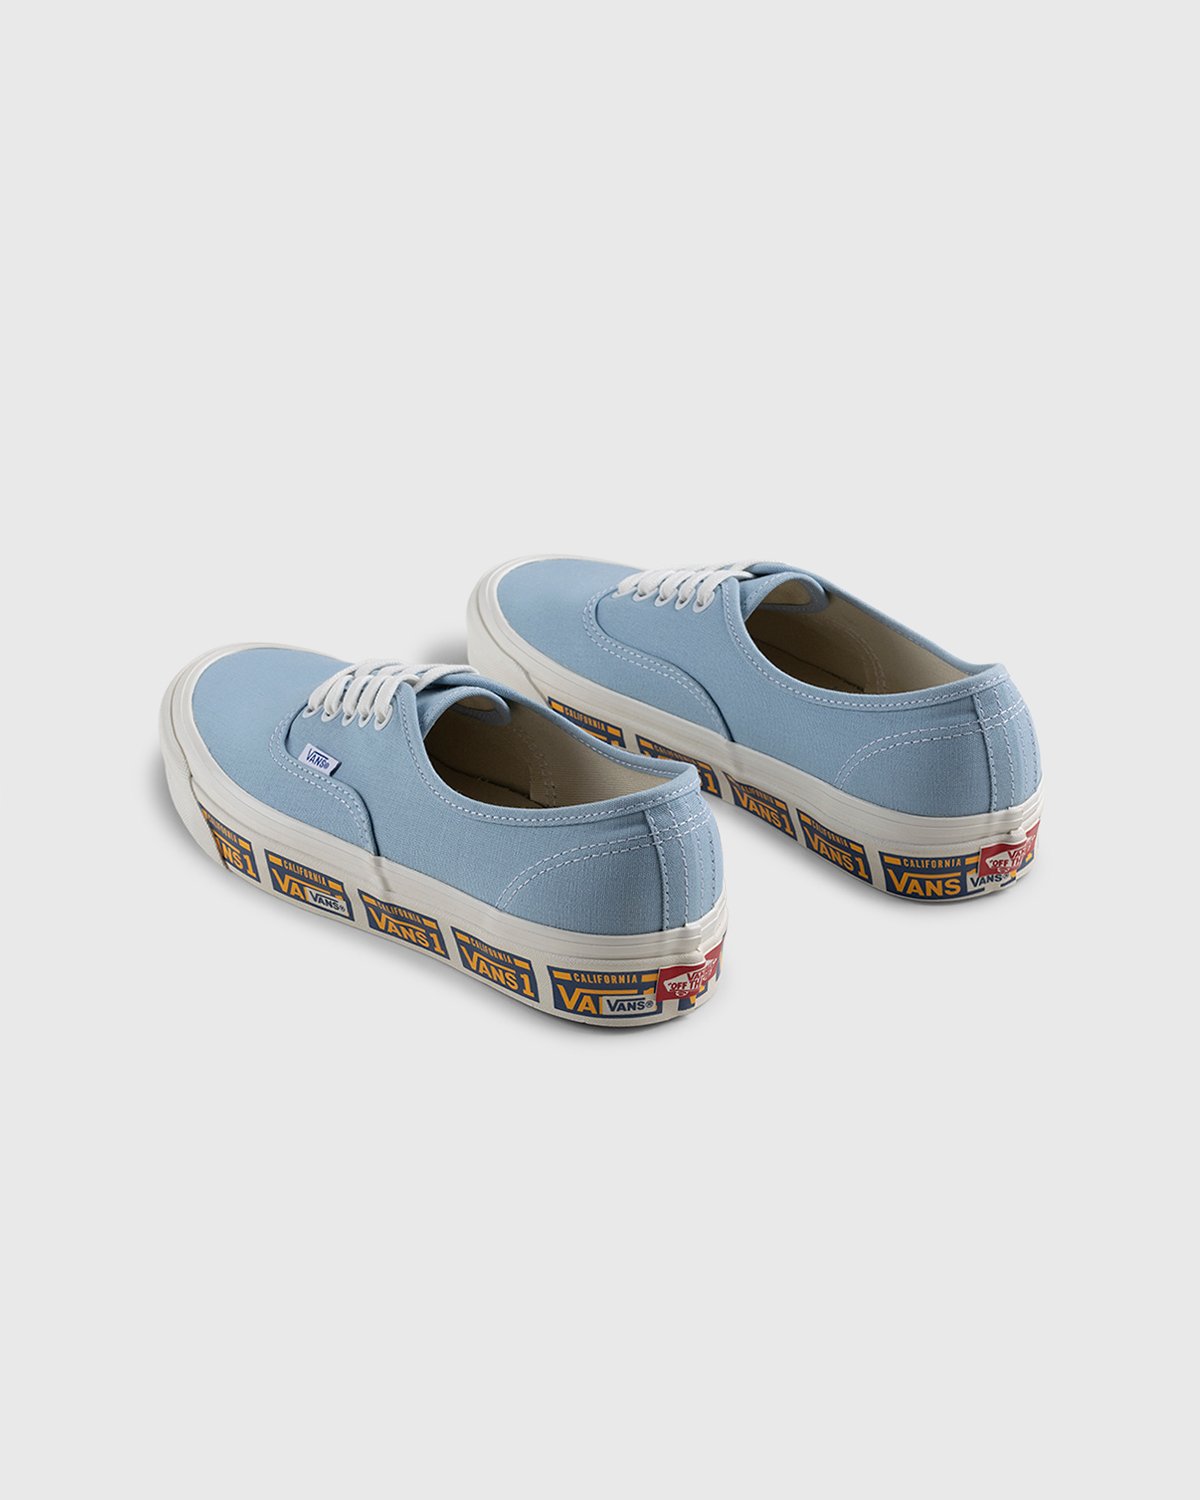 Vans - Anaheim Factory Authentic 44 DX Vanity Plate Lightblue - Footwear - Blue - Image 4